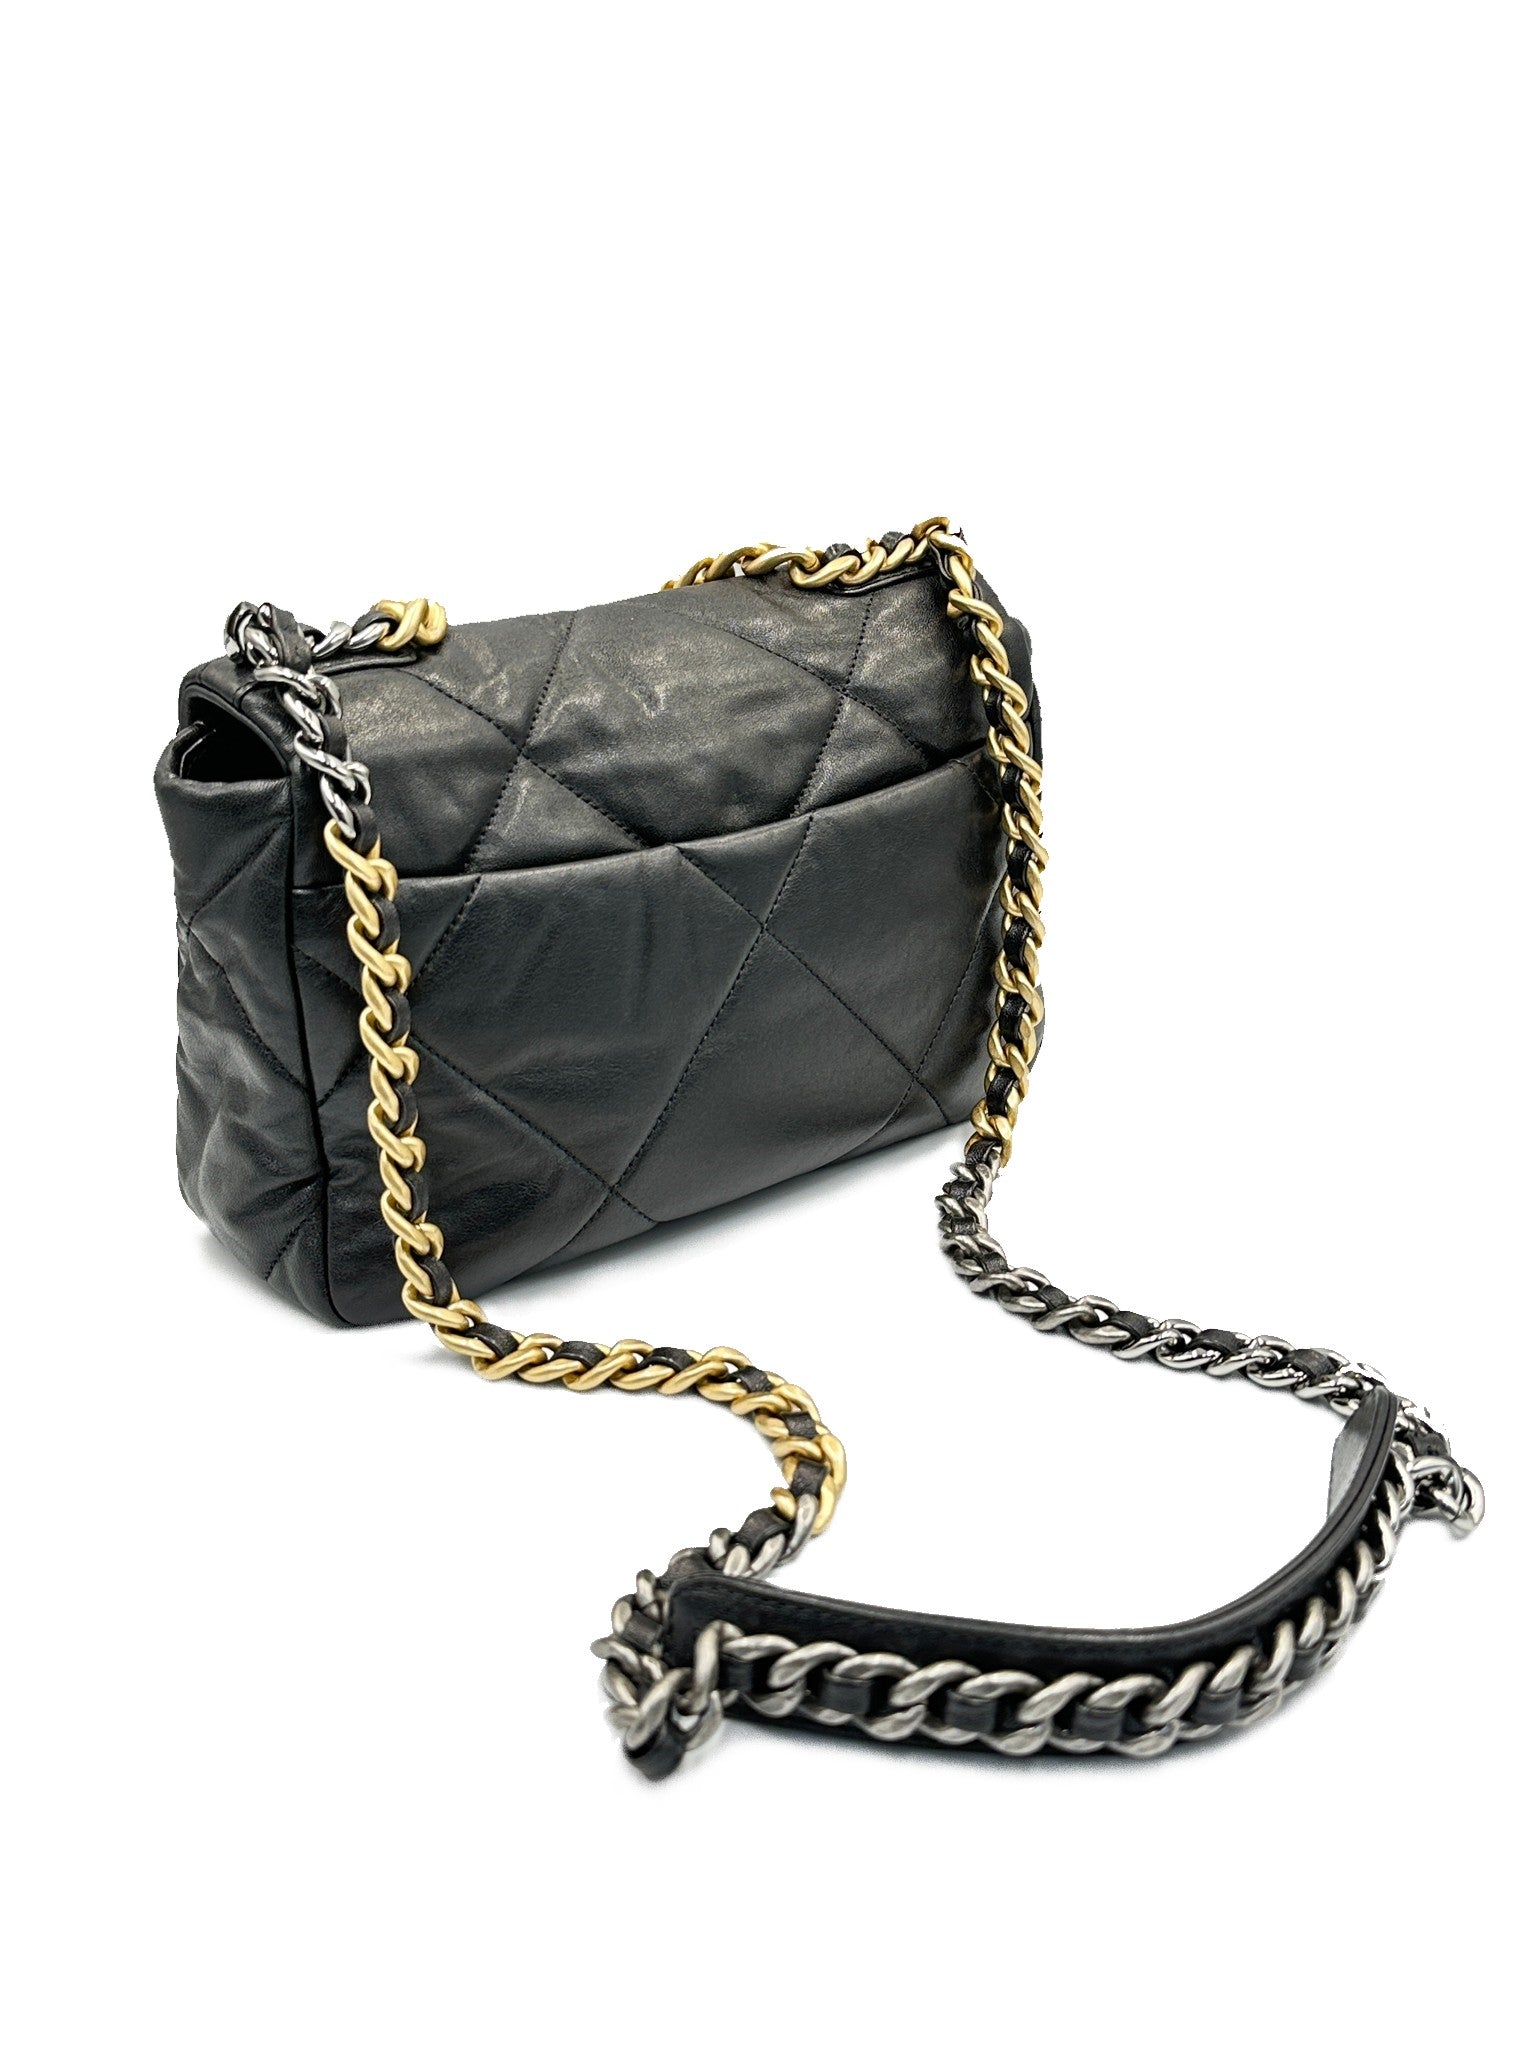 Authentic CHANEL Chanel 19 Line AS1160 Shoulder bag #260-006-060